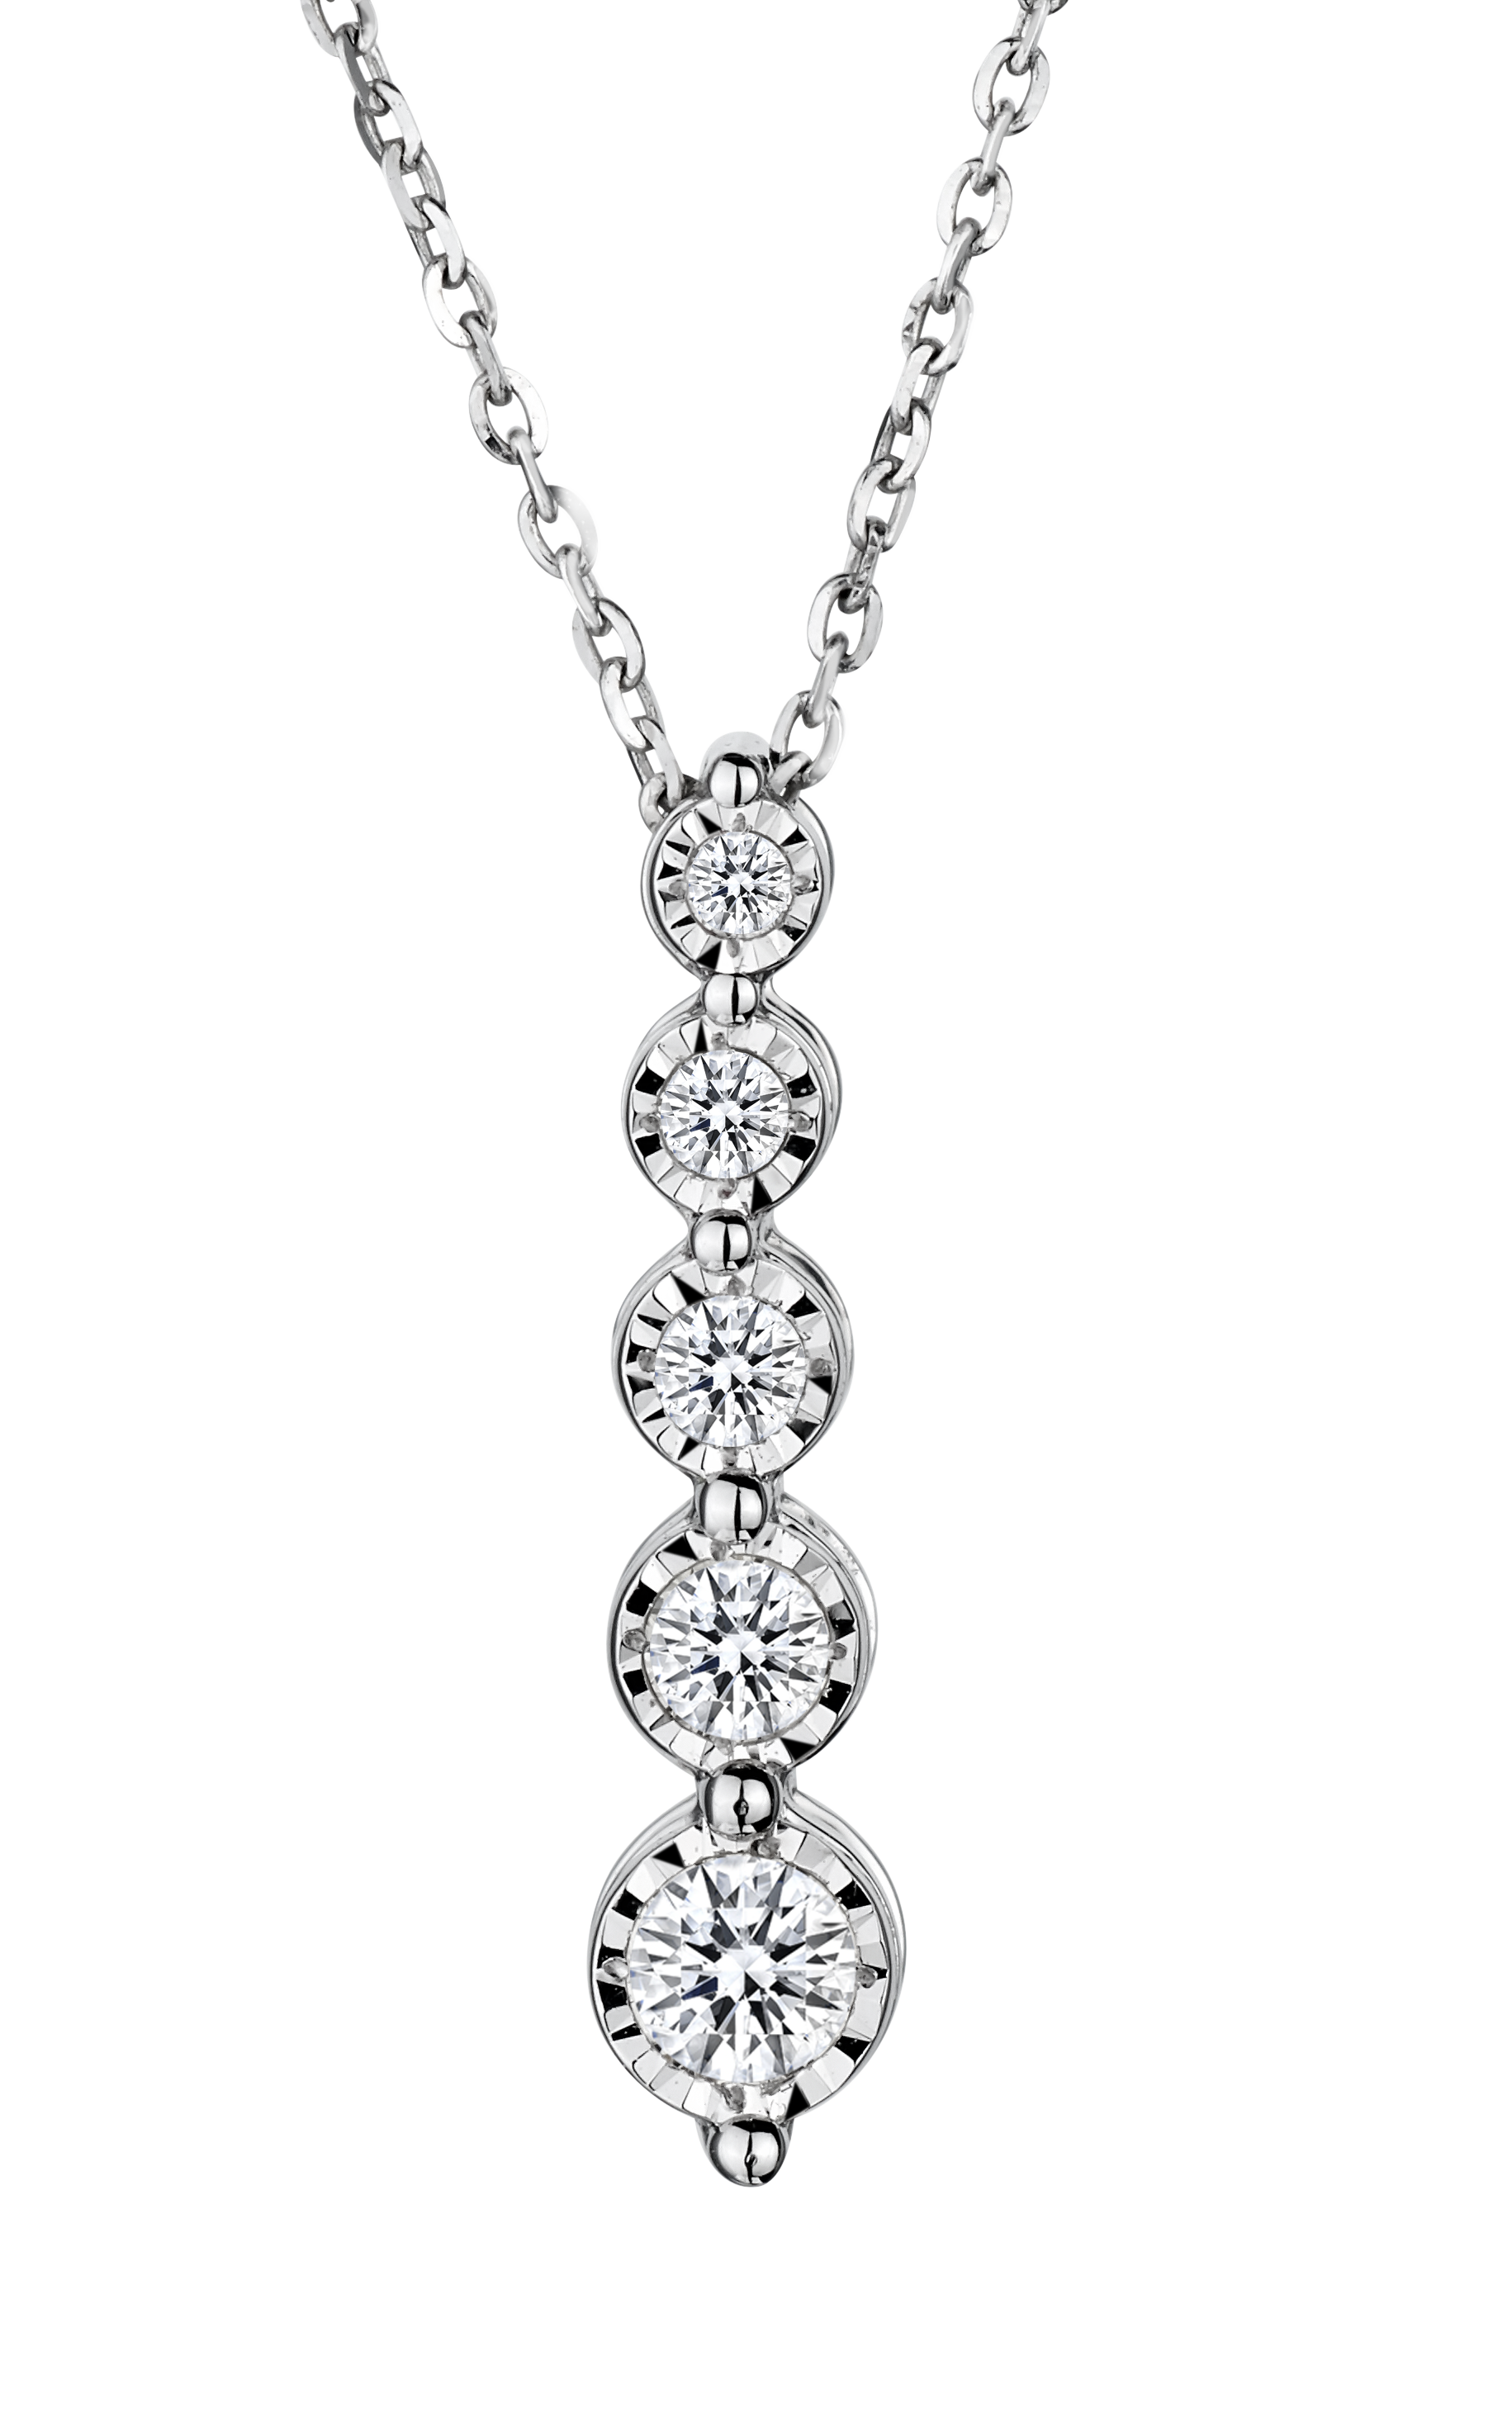 .20 Carat 5 stone Diamond Pendant,  10kt White Gold. Necklaces and Pendants. Griffin Jewellery Designs.